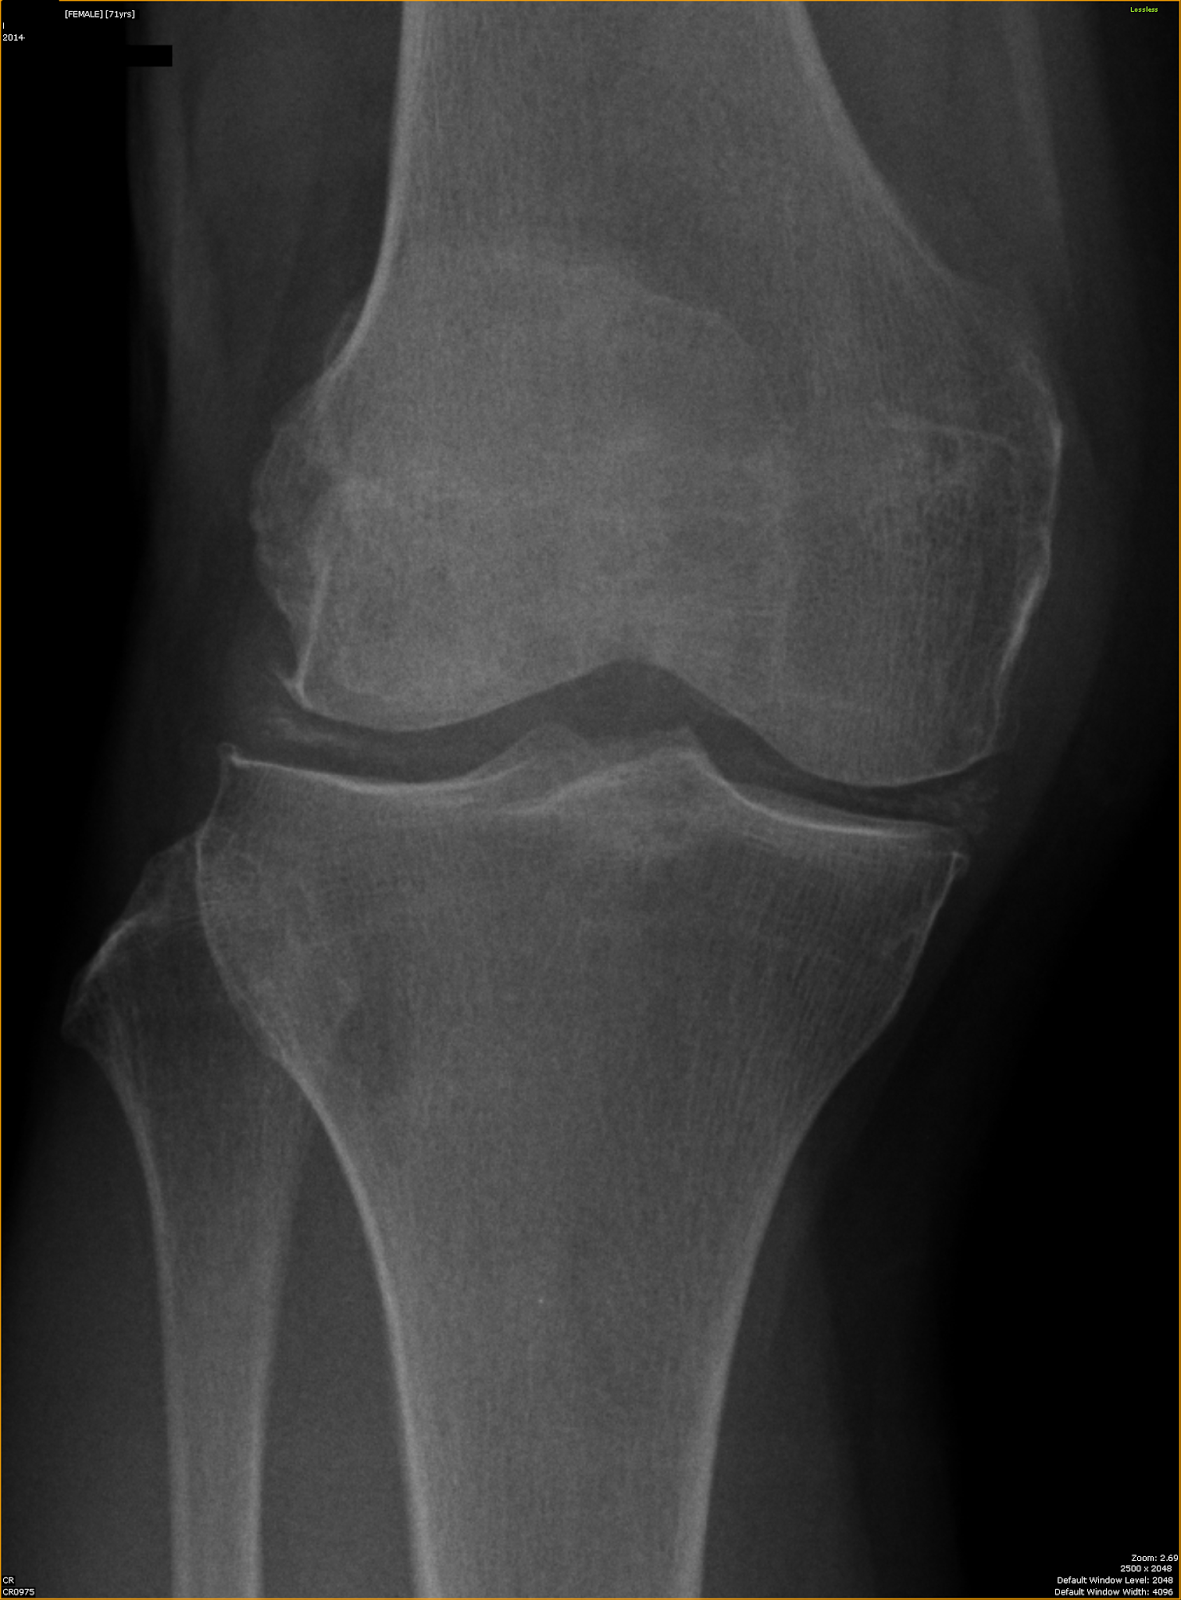 ShareMyRadiology æ¾å°çº¿å¦: Chondrocalcinosis of knee